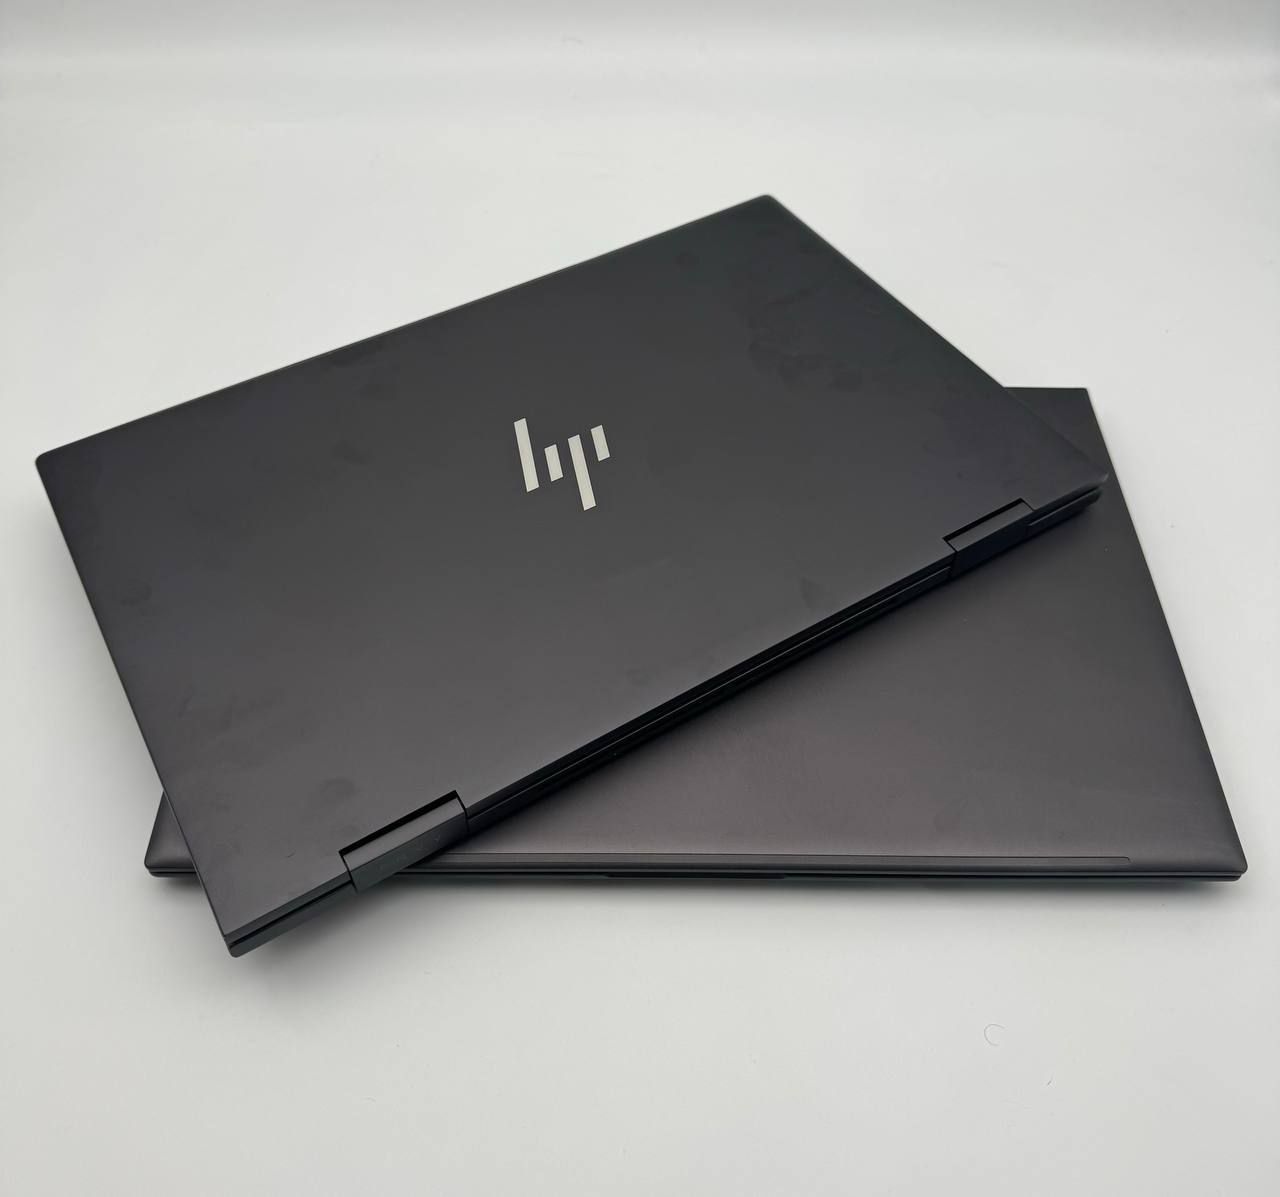 Ноутбук HP ENVY x360